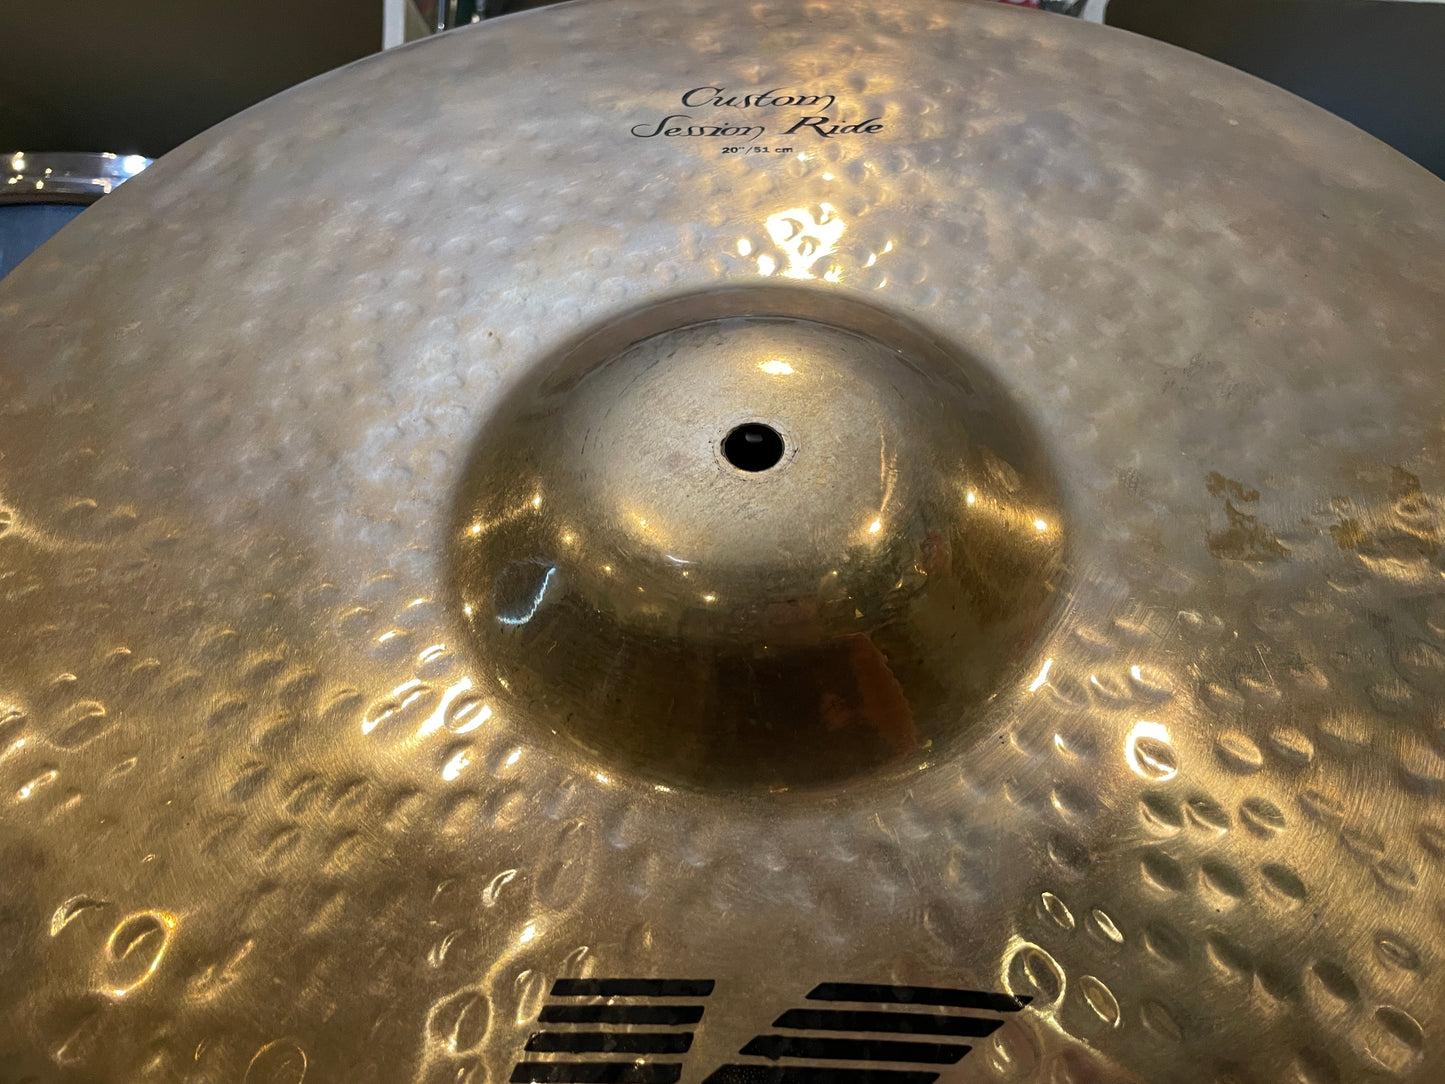 20" Zildjian K Custom Session Ride Cymbal 2744g K0997